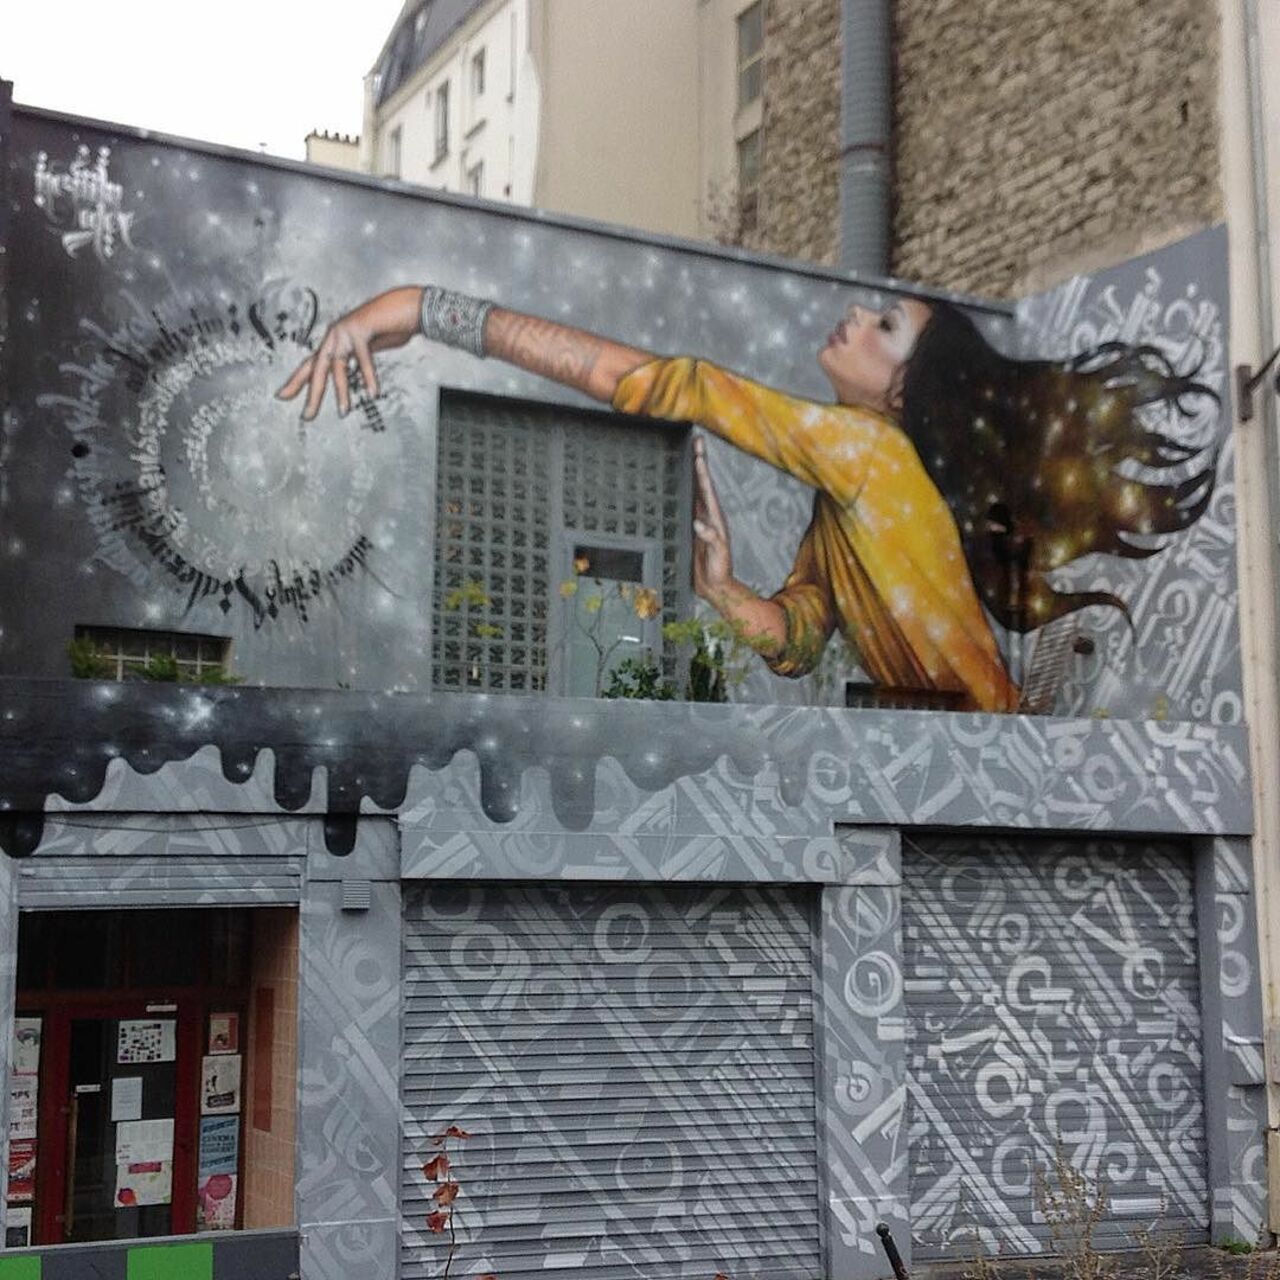 RT @circumjacent_fr: #Paris #graffiti photo by @stefetlinda http://ift.tt/1GuhU6l #StreetArt https://t.co/B264Wejq5U